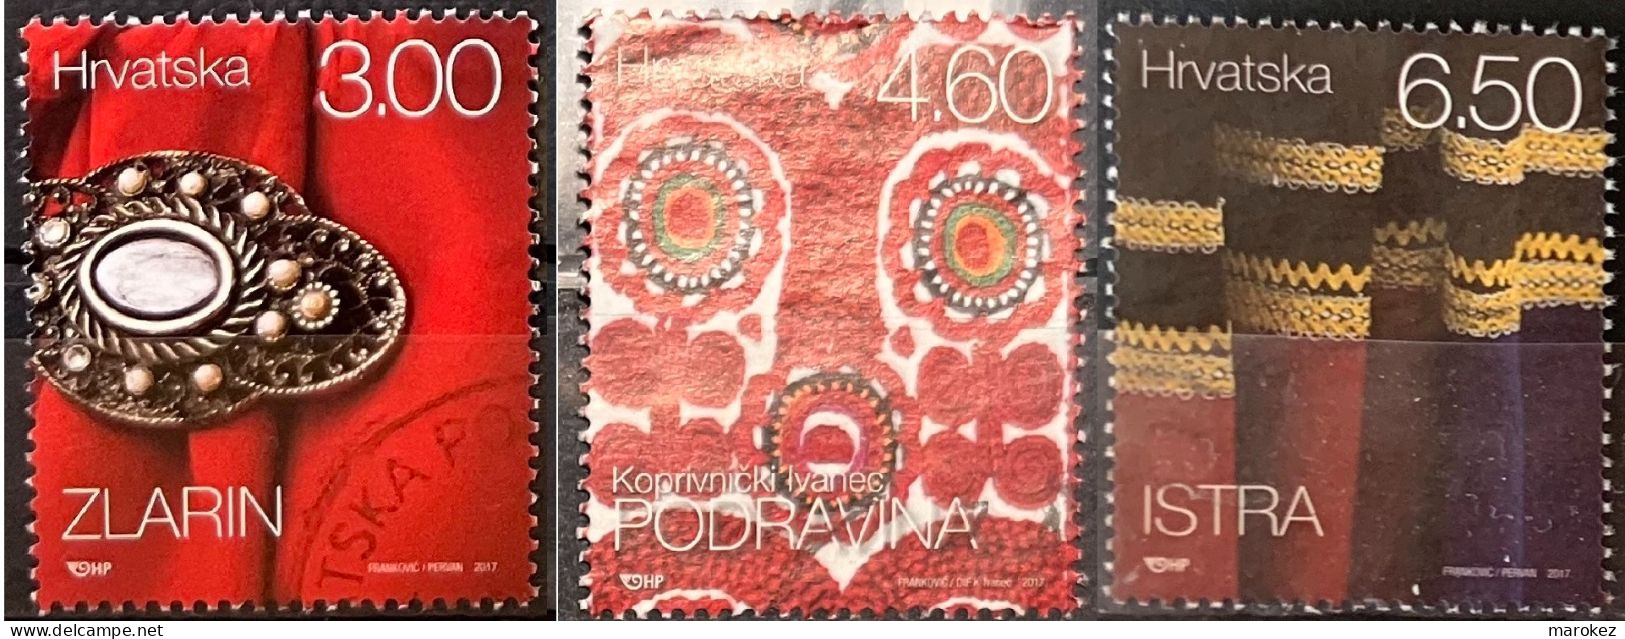 CROATIA 2017 Ethnographical Heritage - Fabric; Zlarin, Istra & Podravina Postally Used Stamps MICHEL # 1268,1269,1271 - Croatia